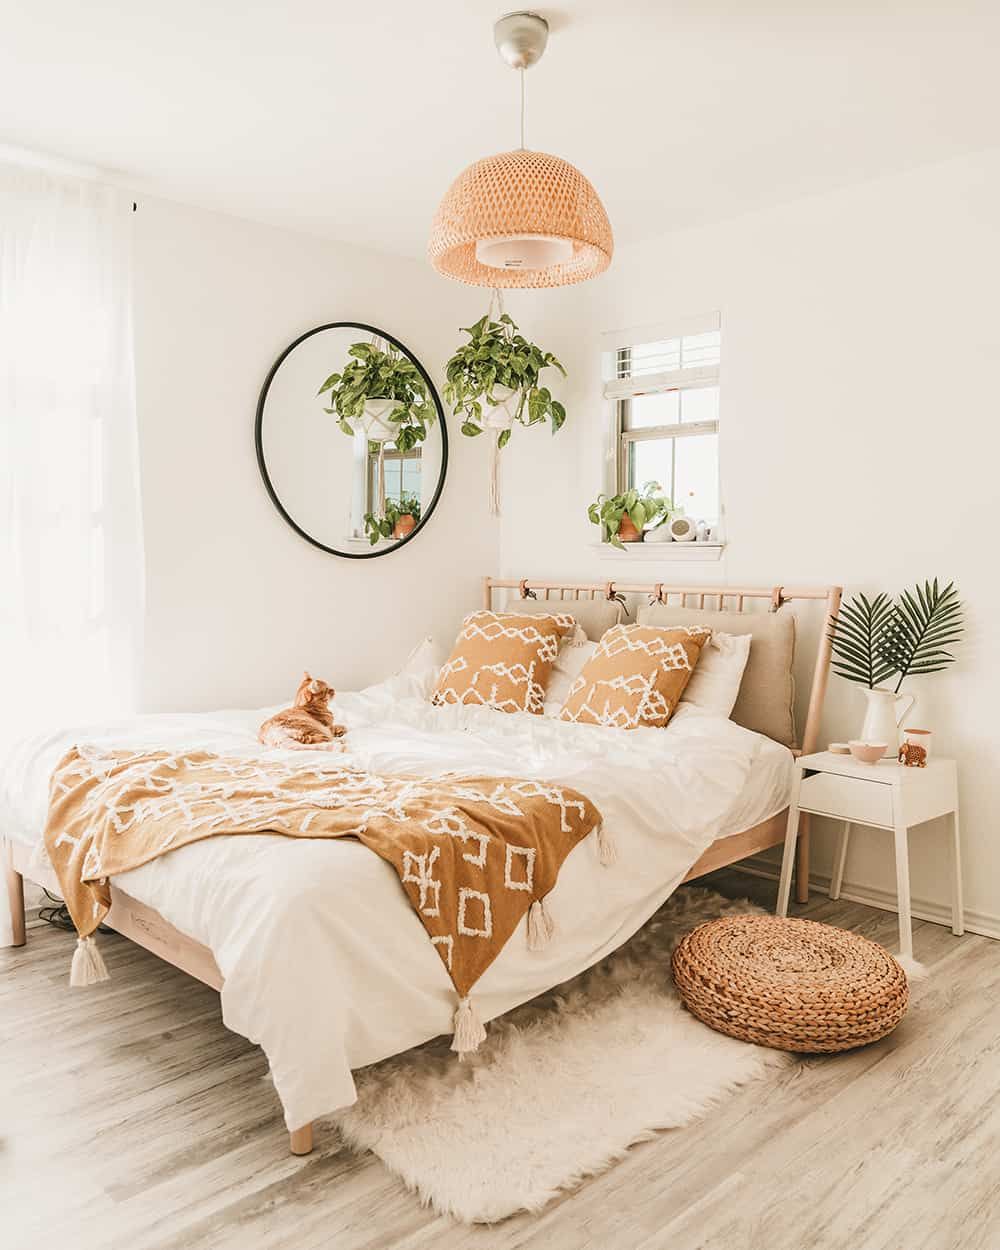 13 Boho Bedroom Ideas Decorating a Bohemian Bedroom a Budget